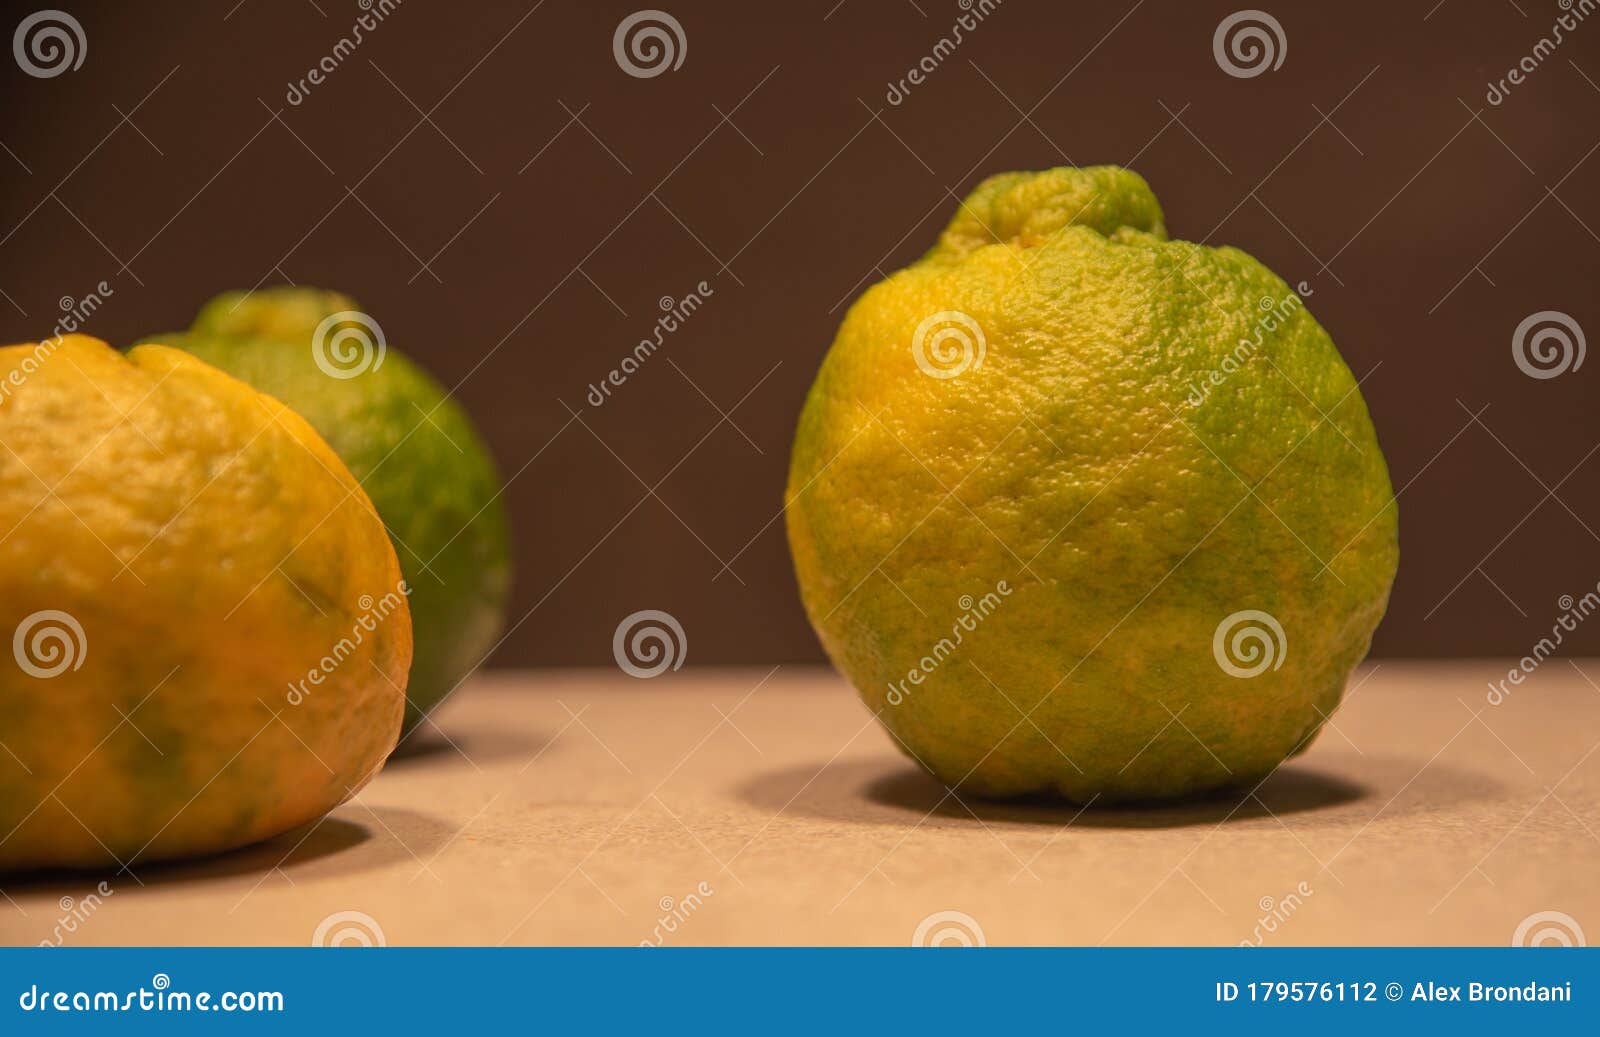 bergamot fruits citrus sp. on lighted surface and dark background